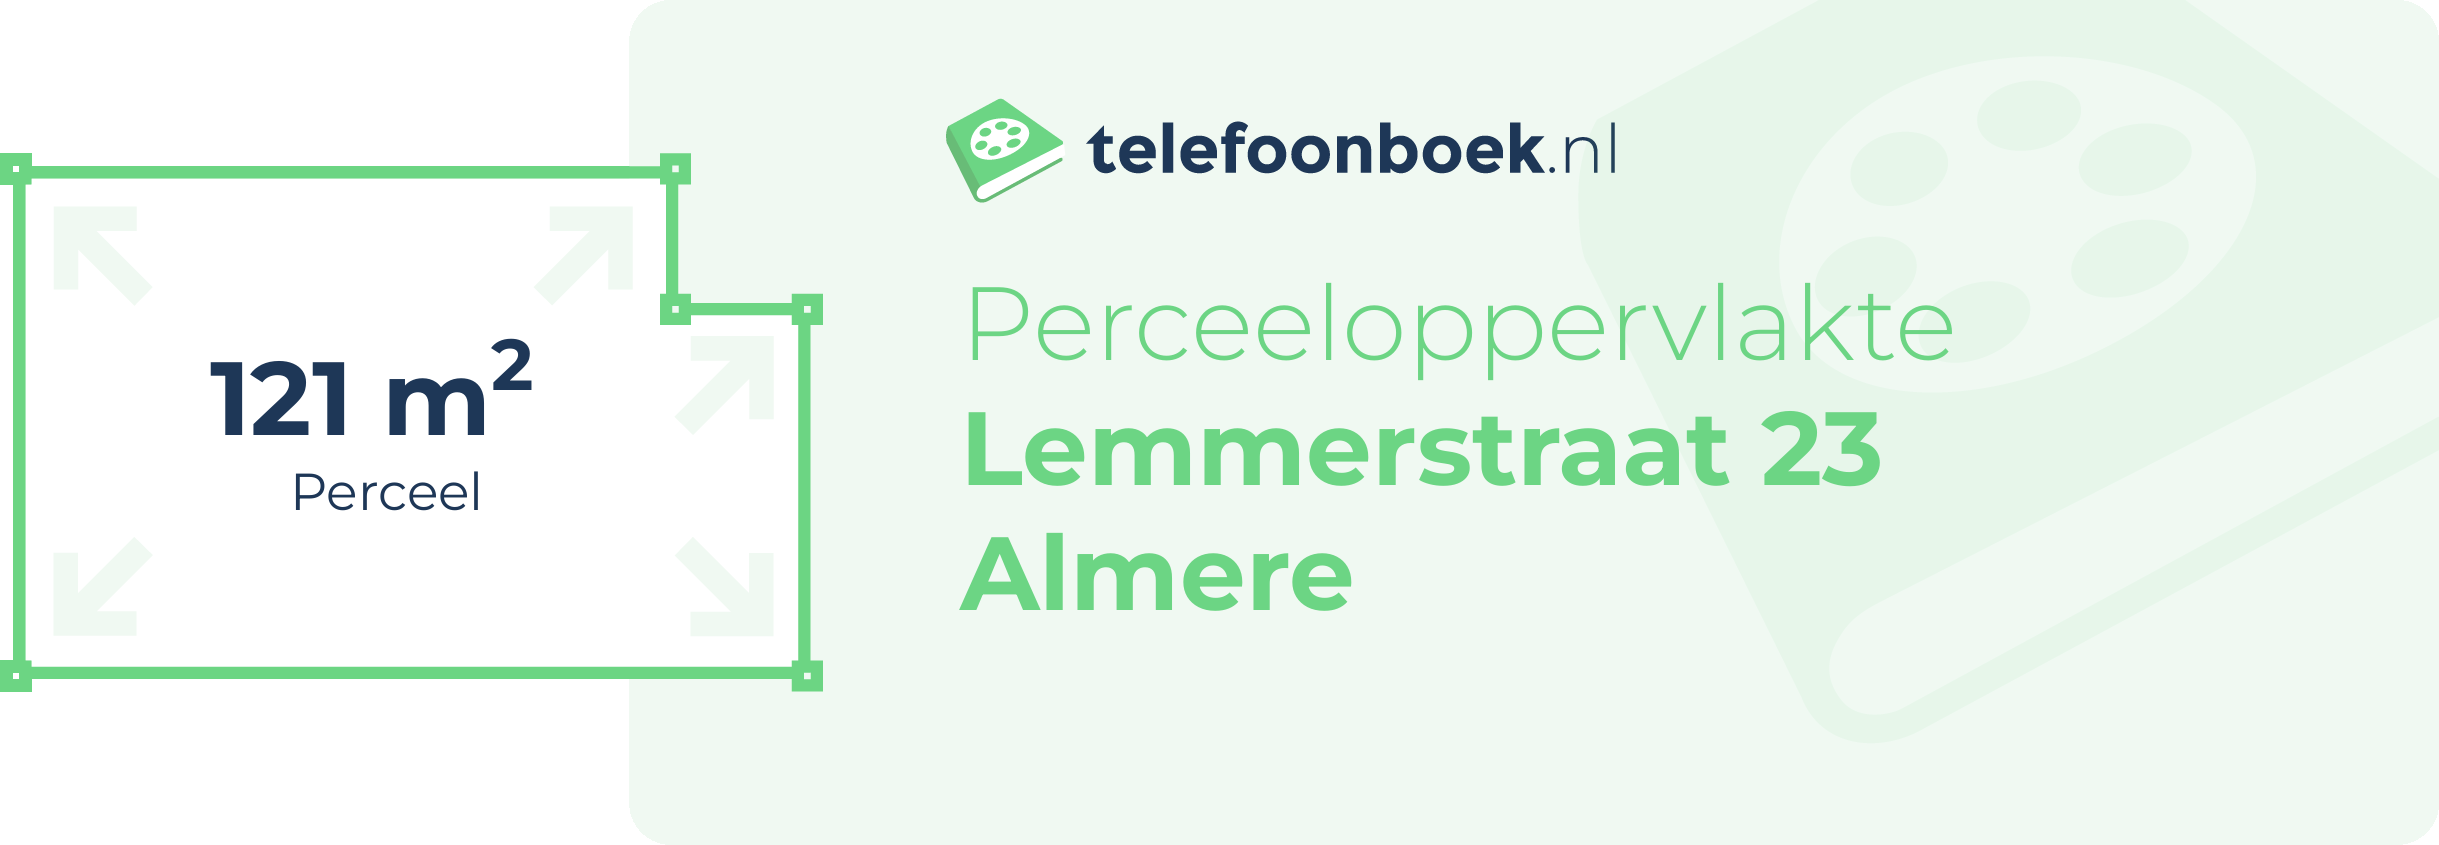 Perceeloppervlakte Lemmerstraat 23 Almere